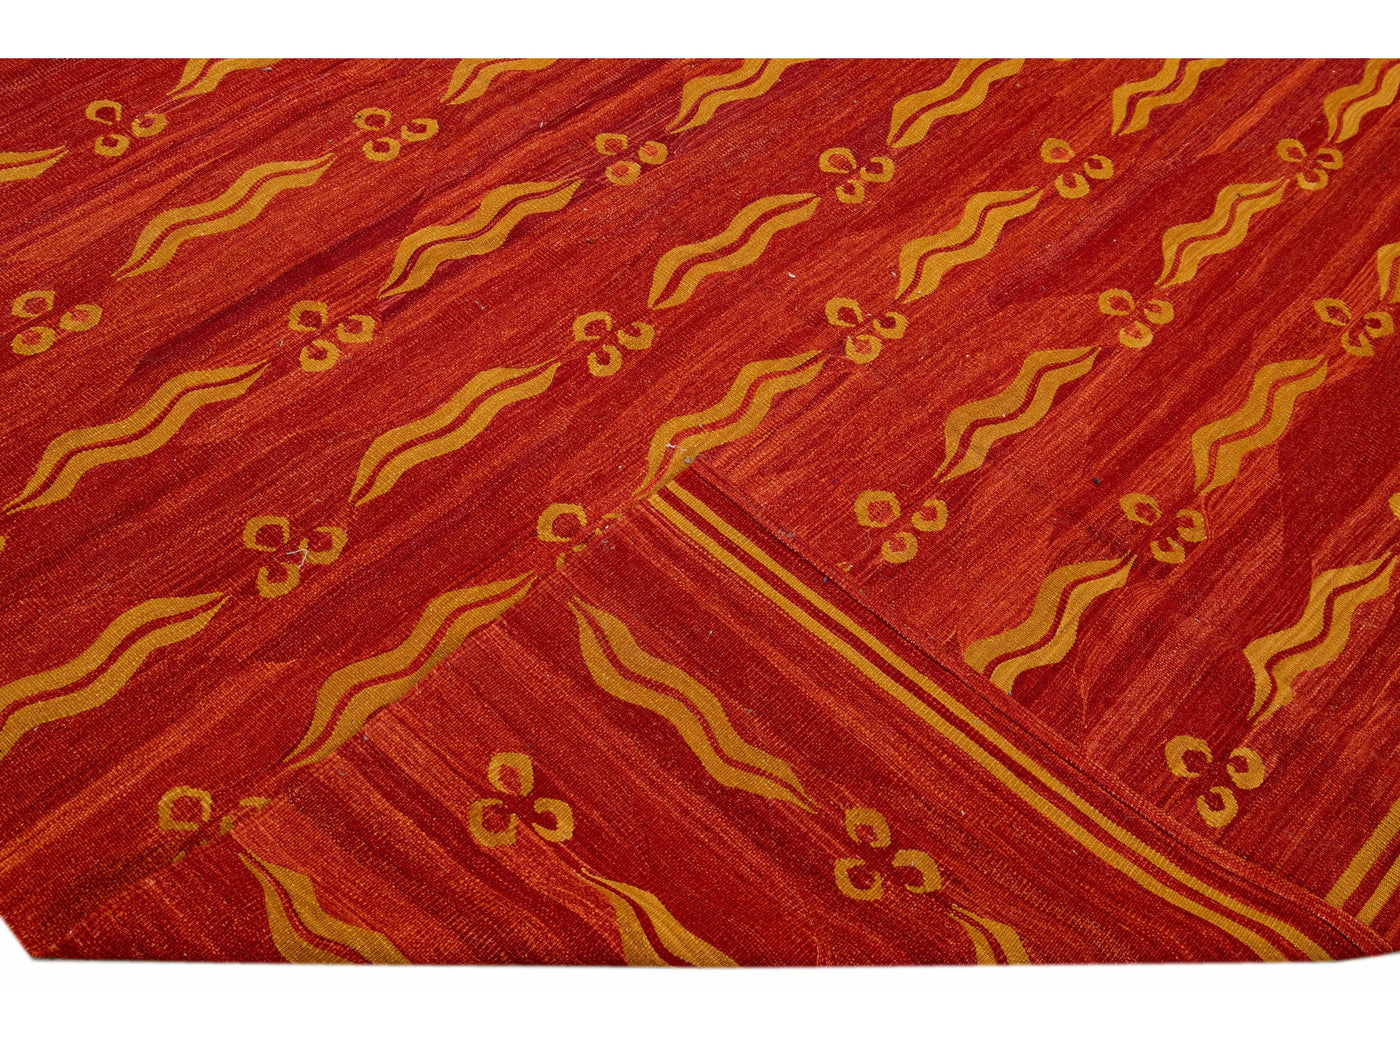 Modern Rust Kilim Flatweave Geometric Pattern Wool Rug